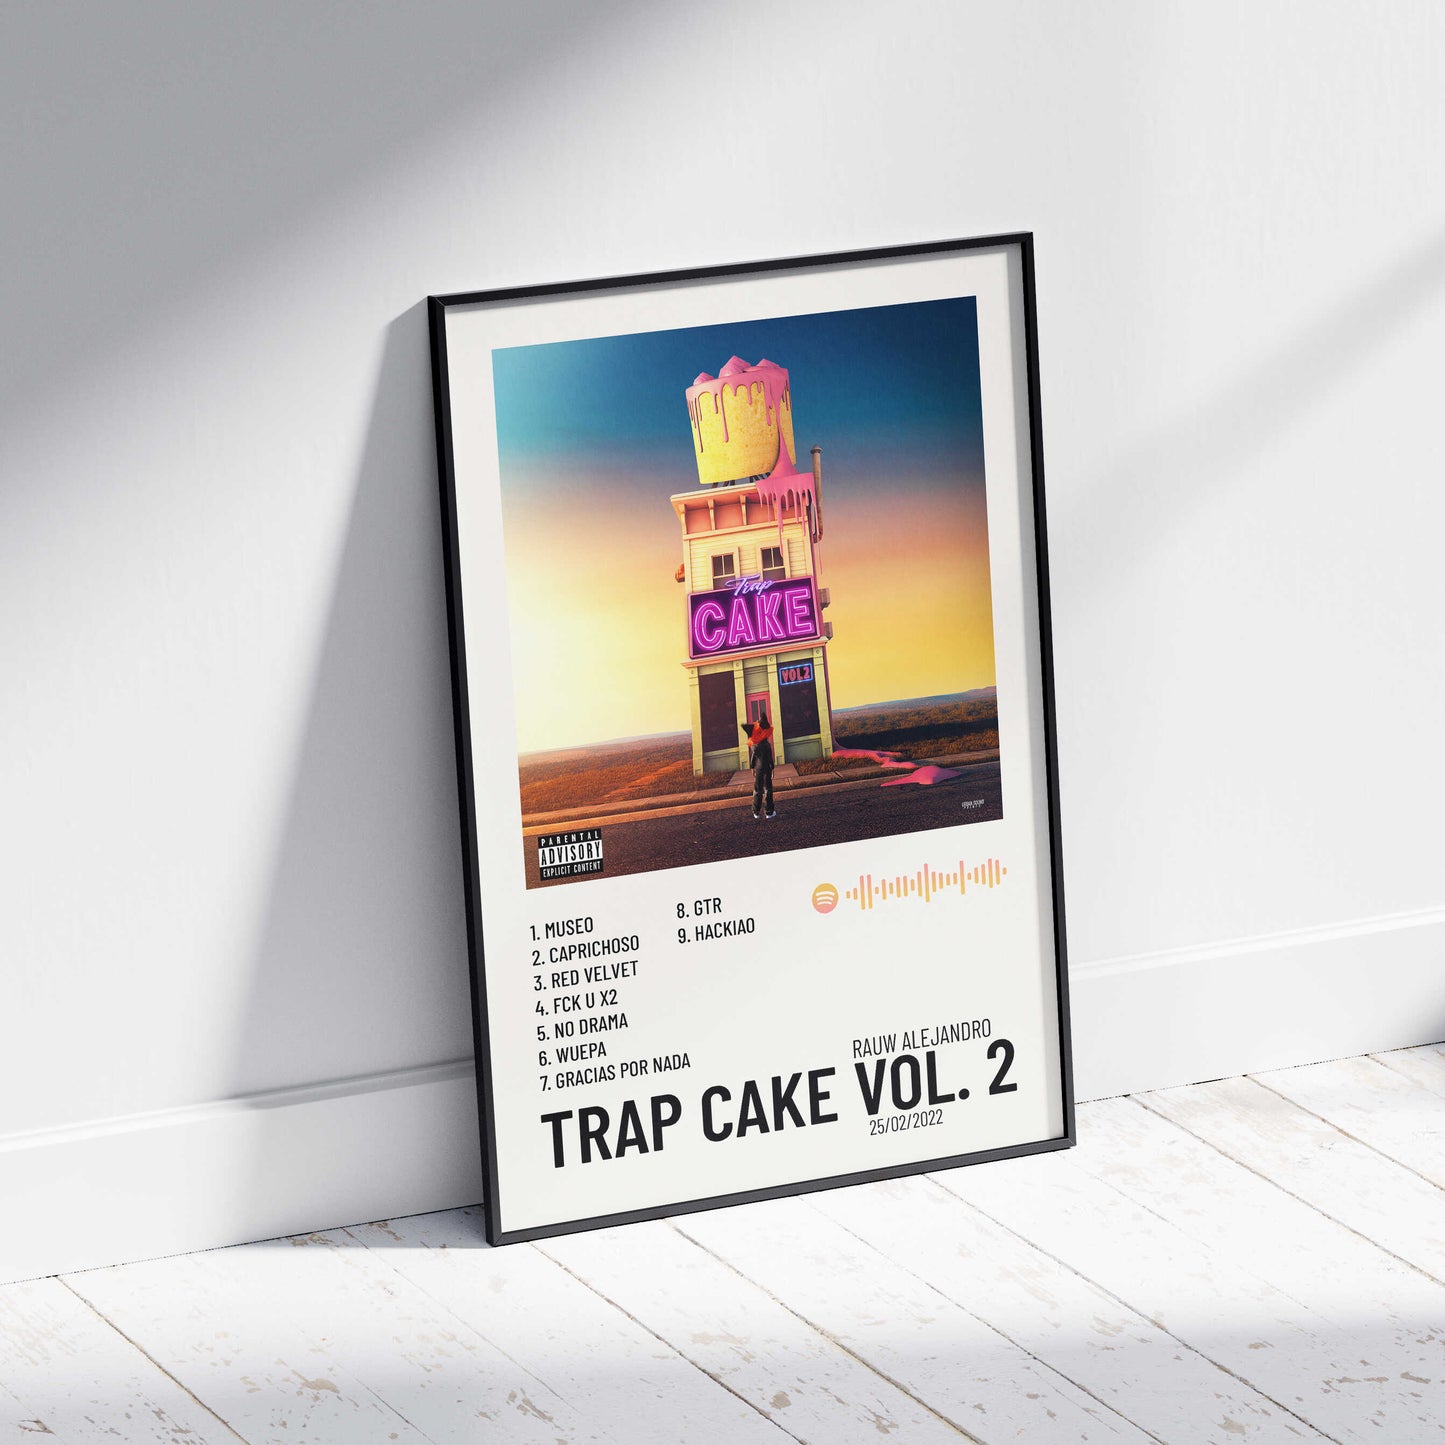 TRAP CAKE VOL. 2